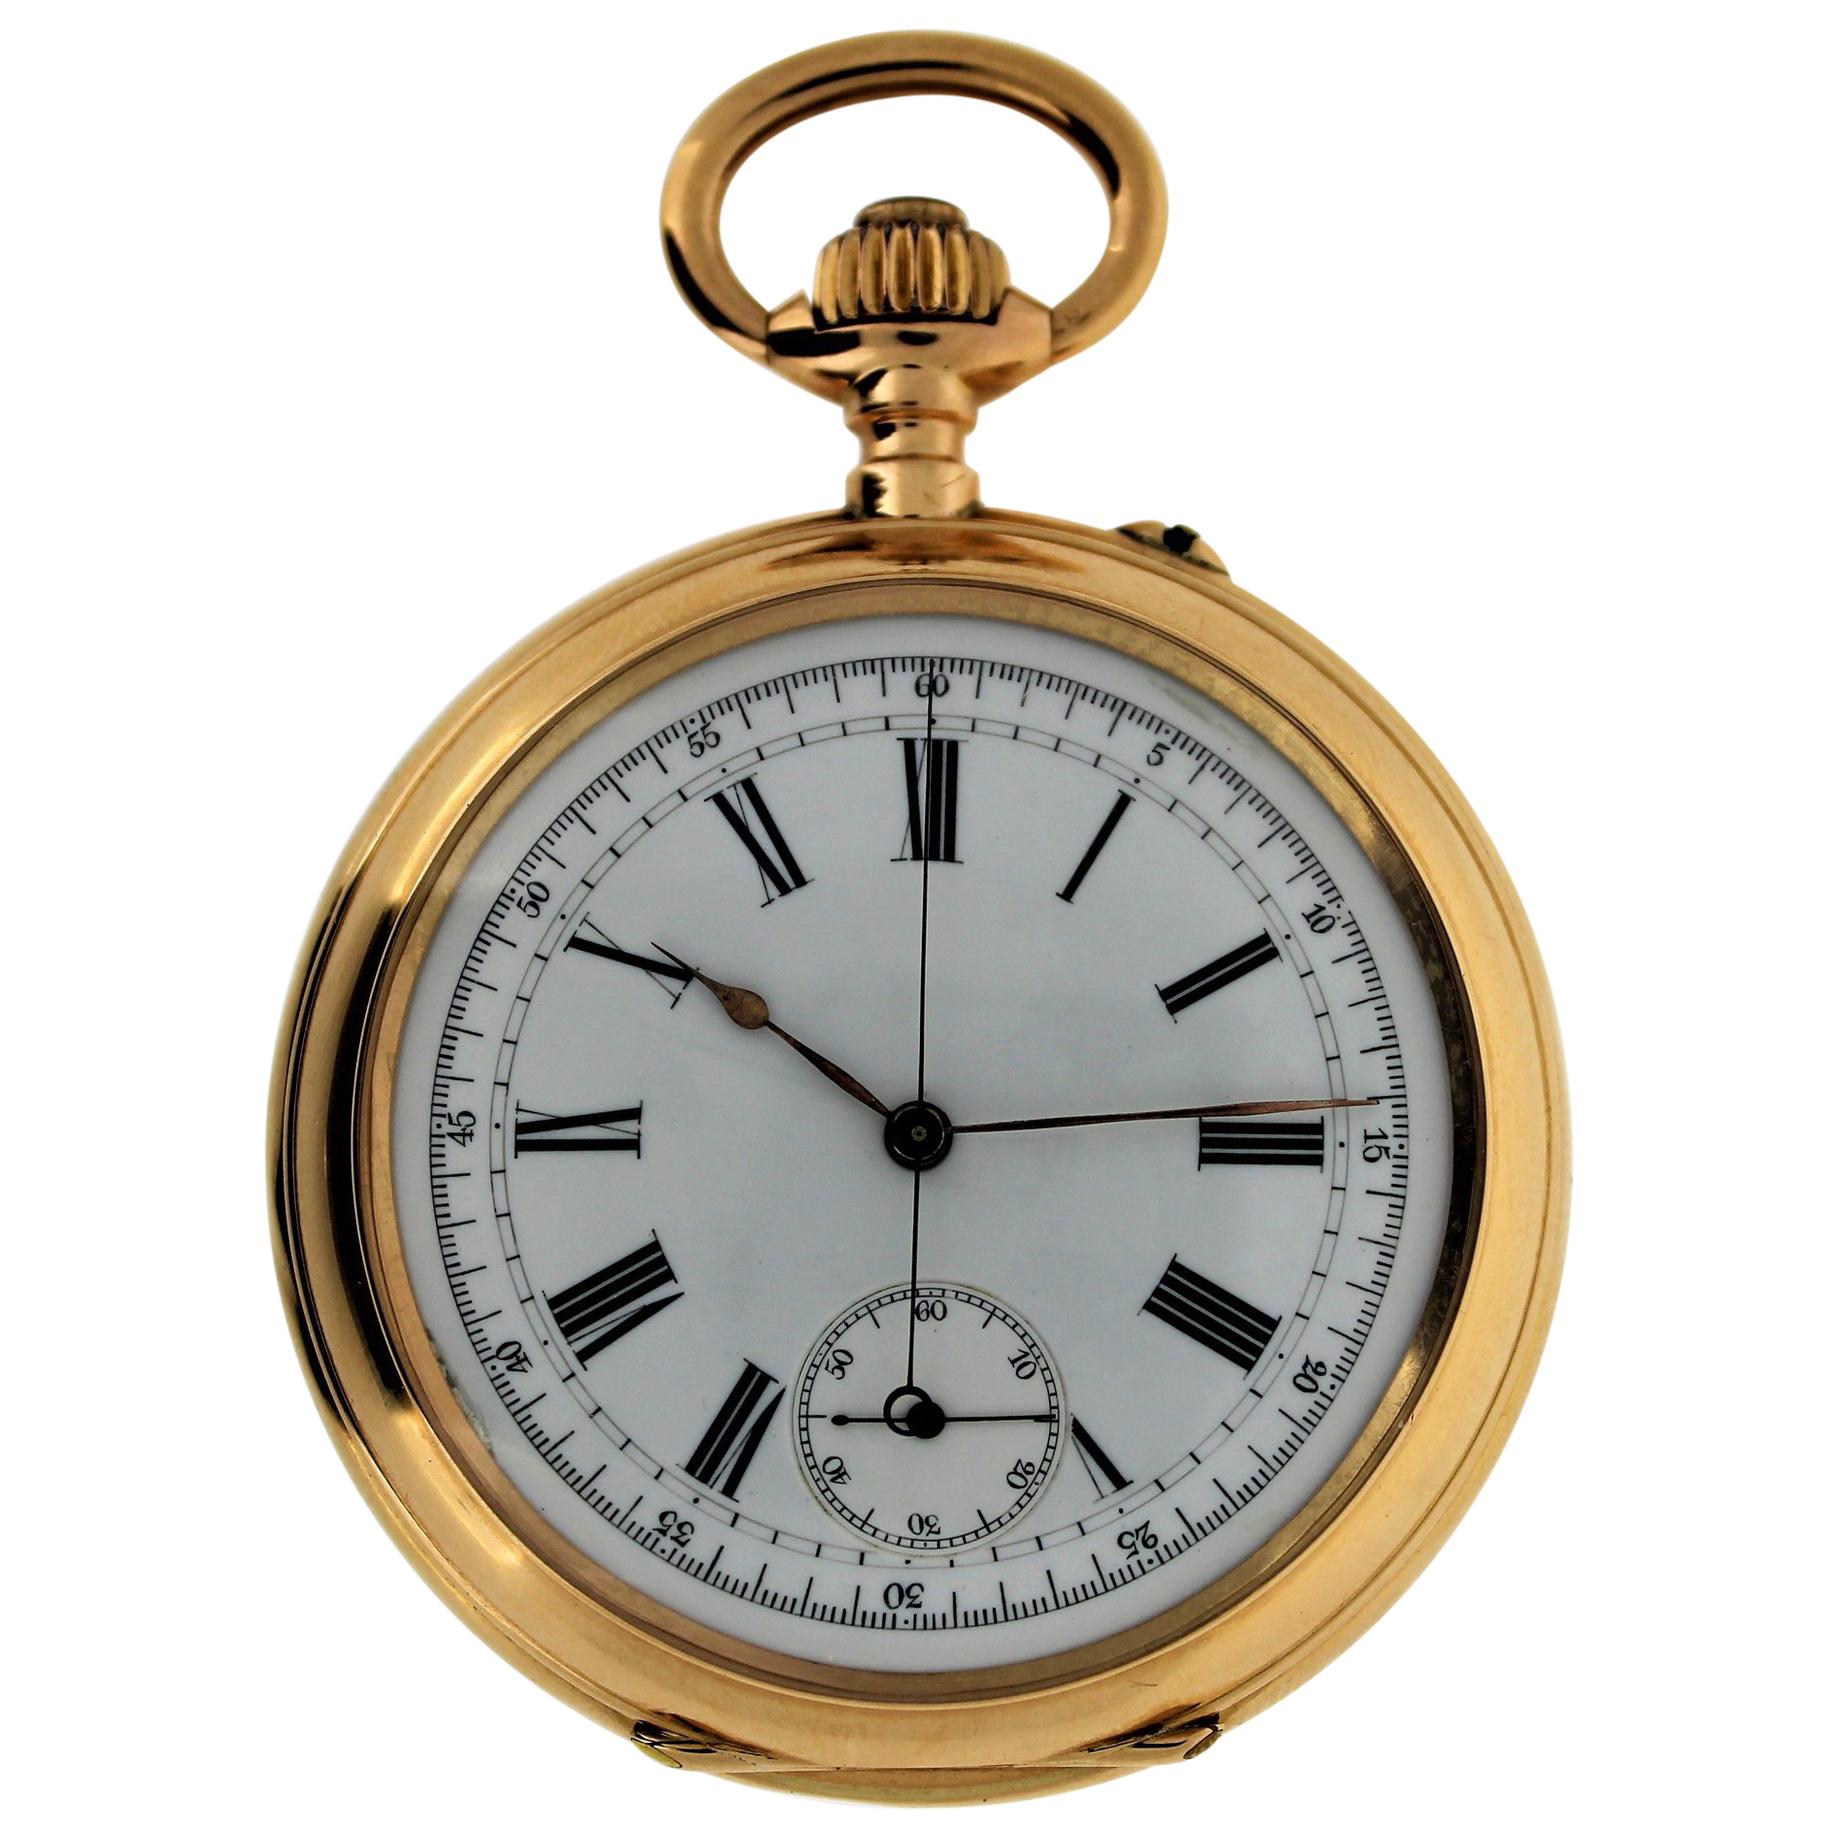 Pateck & Cie.  Chronograph Pocket Watch